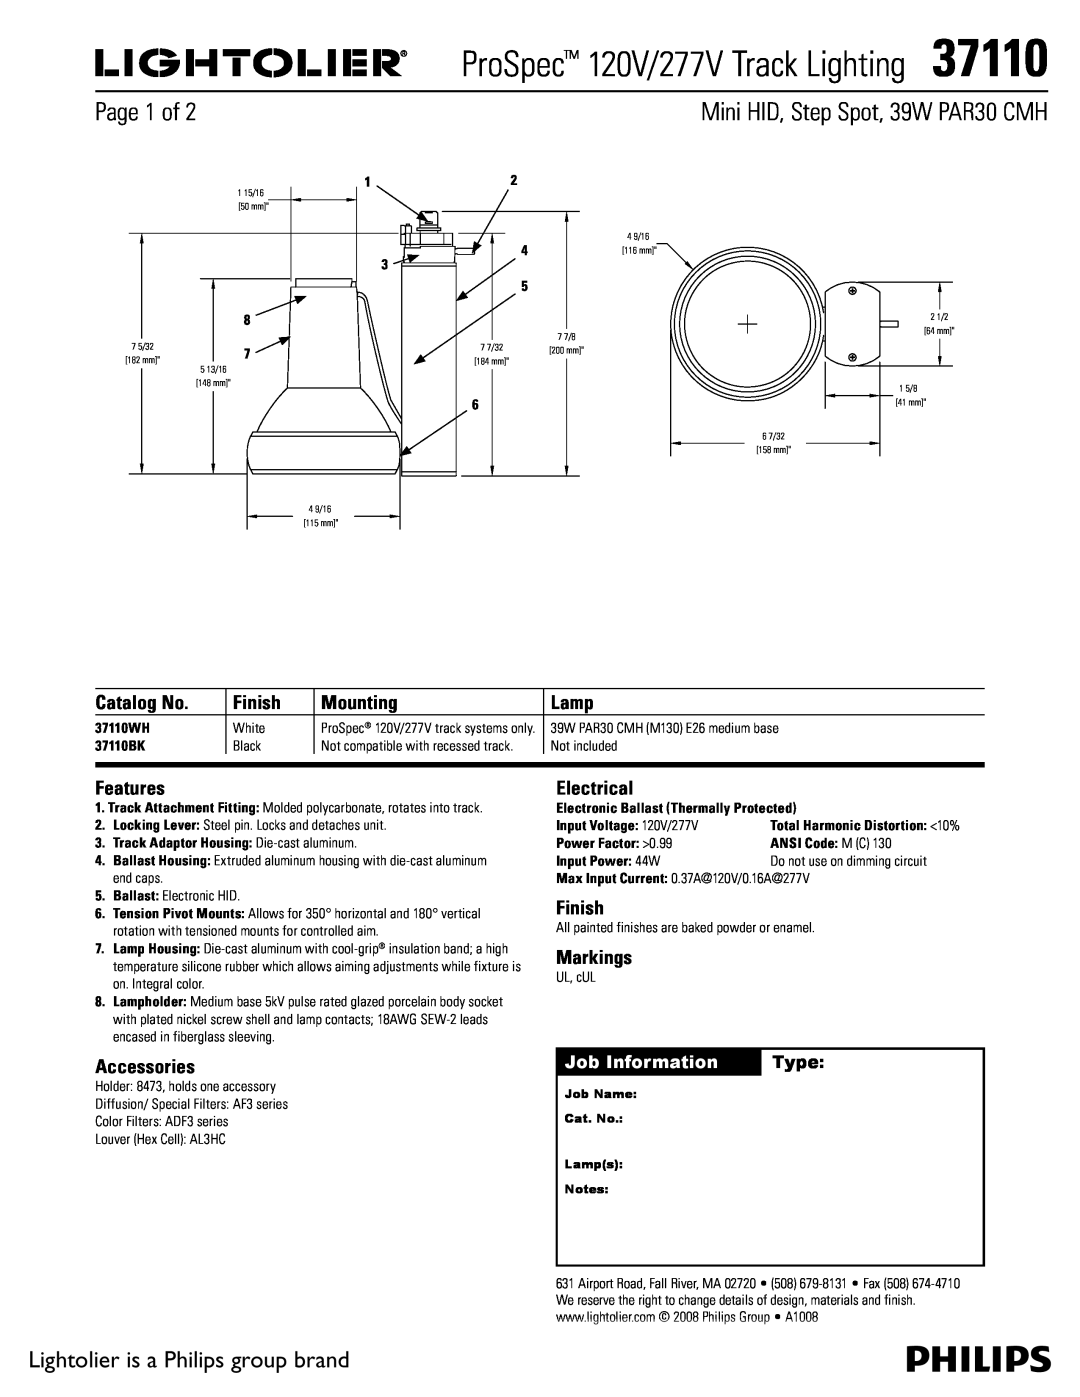 Lightolier manual ProSpec 120V/277V Track Lighting37110, Mini HID, Step Spot, 39W PAR30 CMH, Page 1 of, Catalog No 